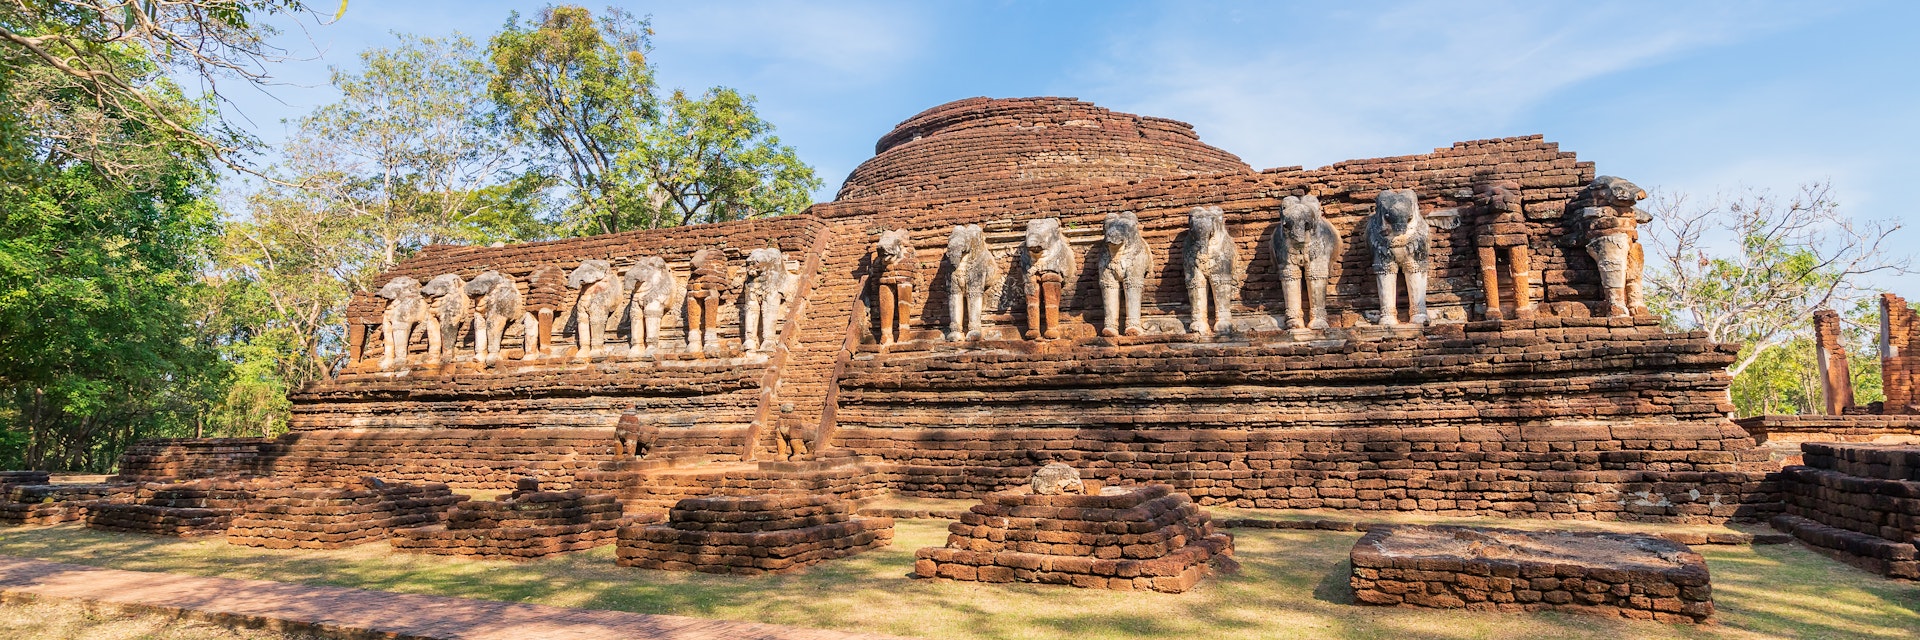 Wat Chang Rob temple in Kamphaeng Phet Historical Park.